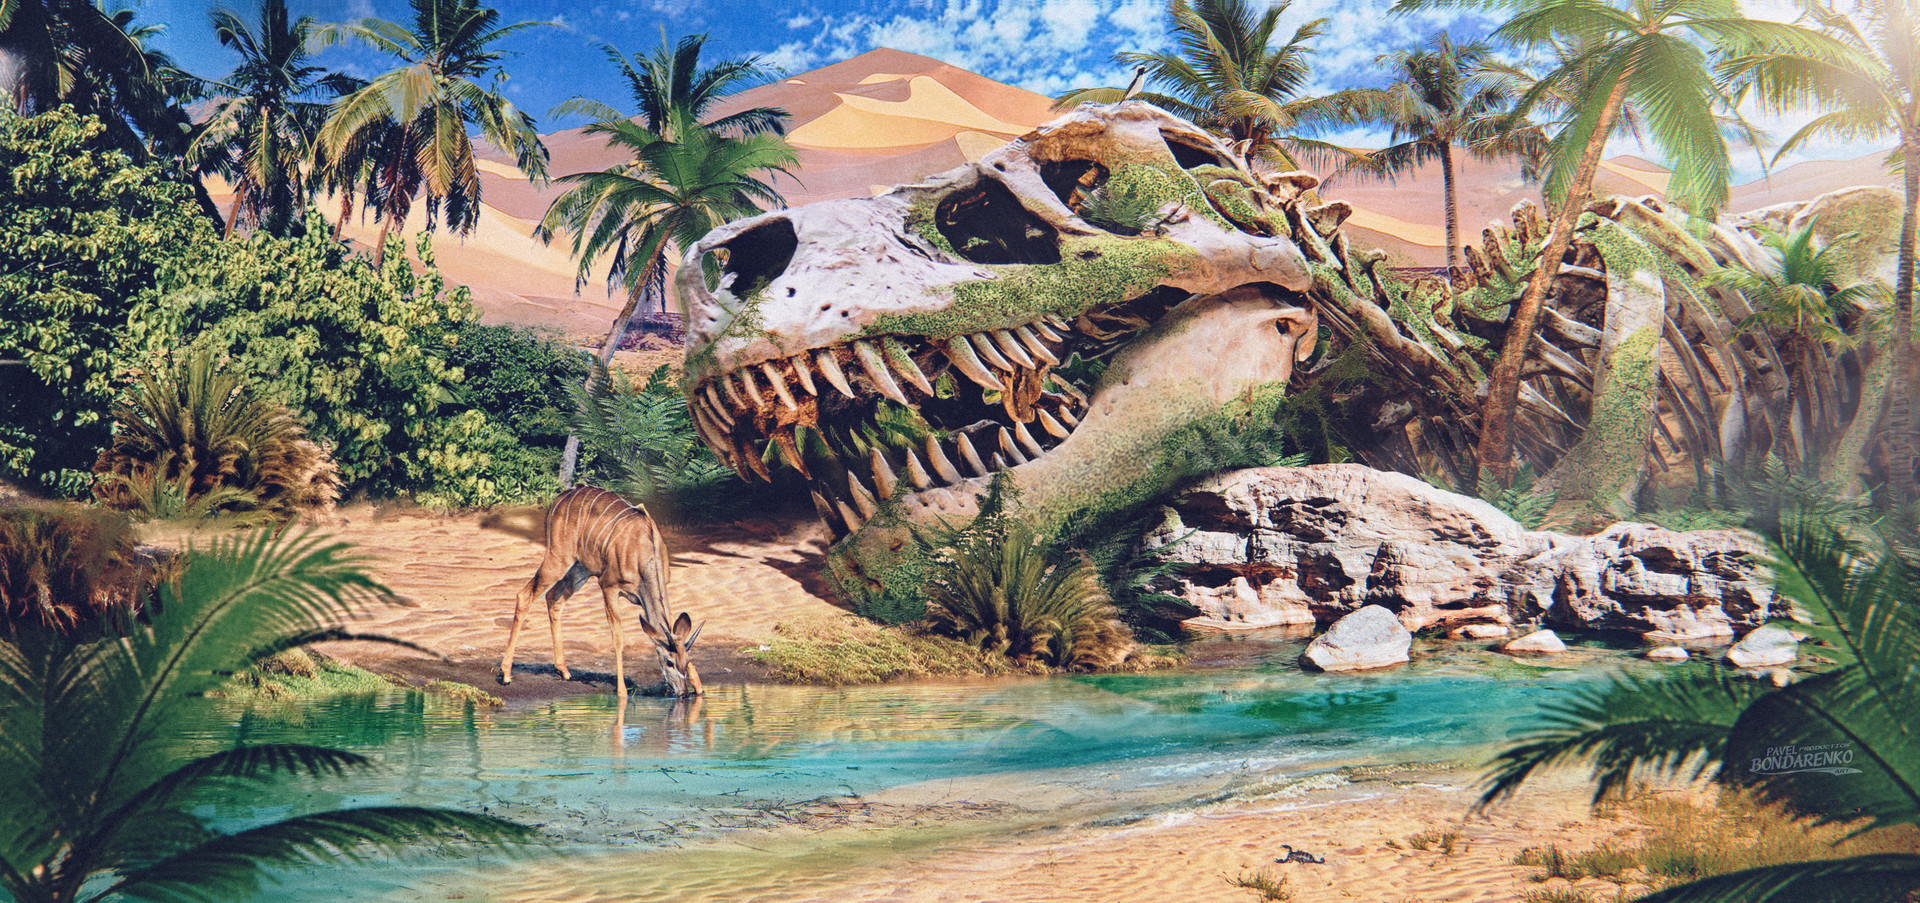 General 1920x903 Pavel Bondarenko drawing dinosaurs fossils oasis deer nature desert water drinking sand bushes palm trees bones teeth skeleton moss mouth